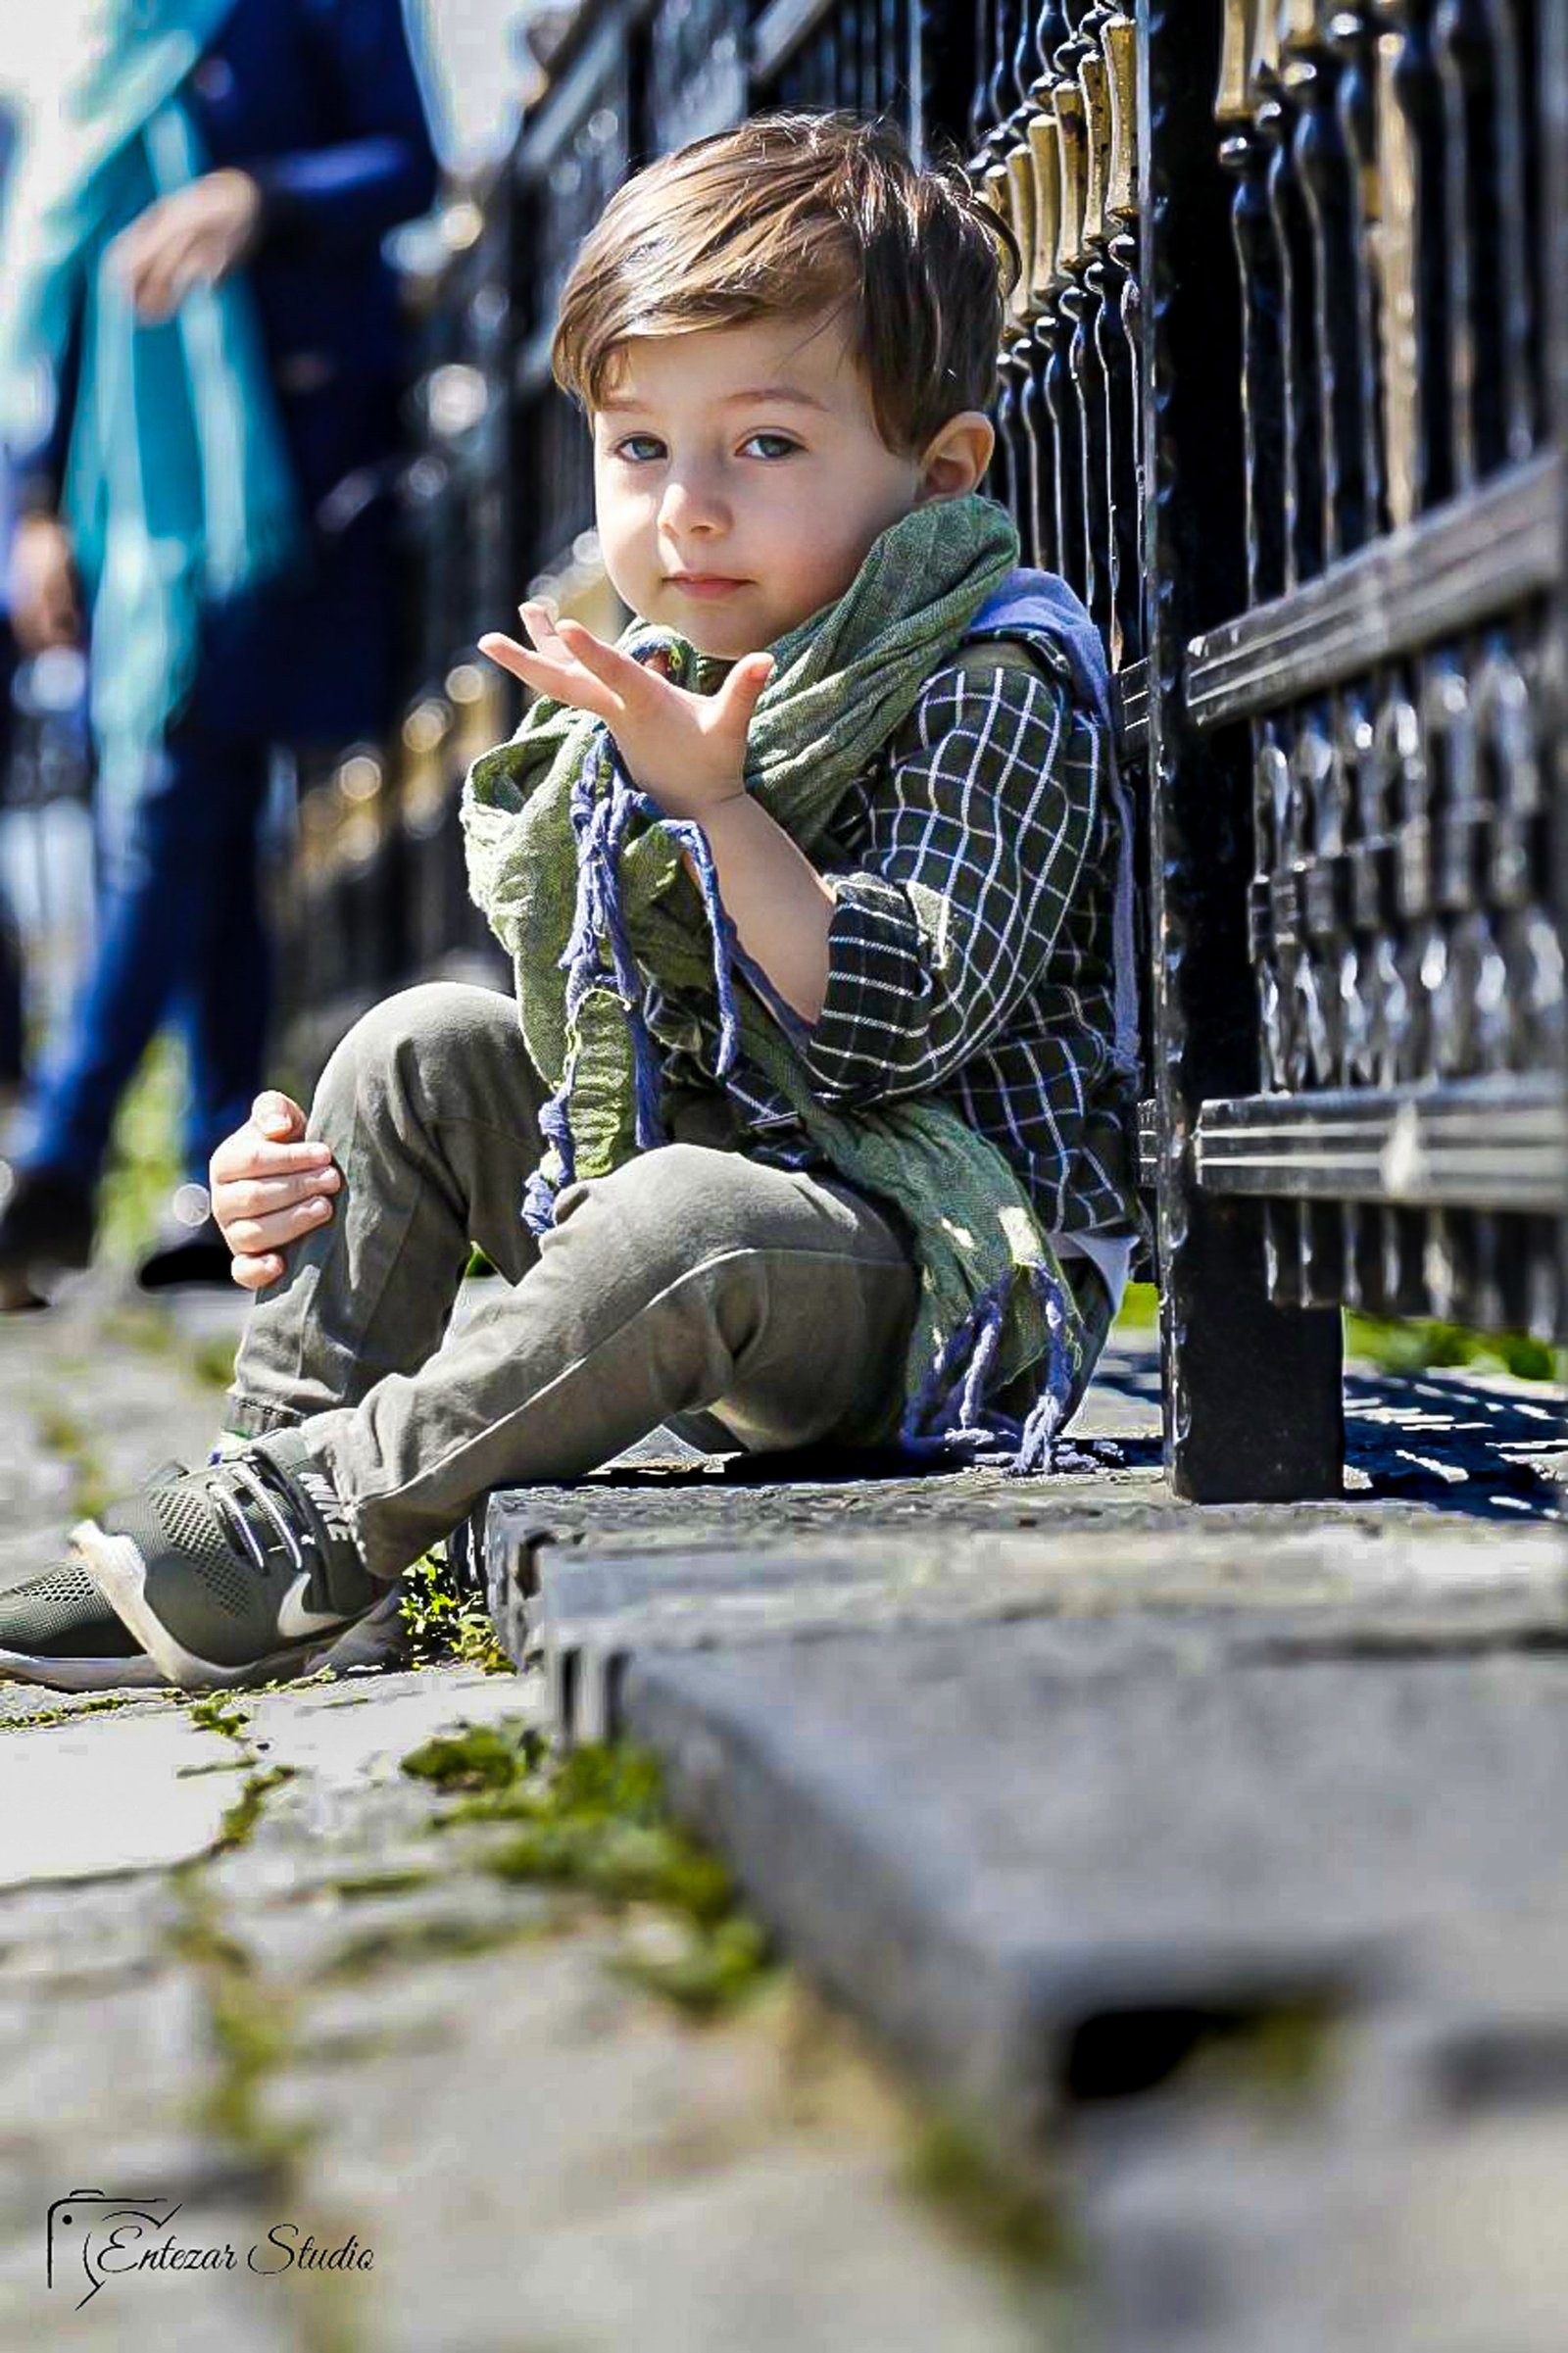 Kids photography in Istanbul by EntezarStudio - 15